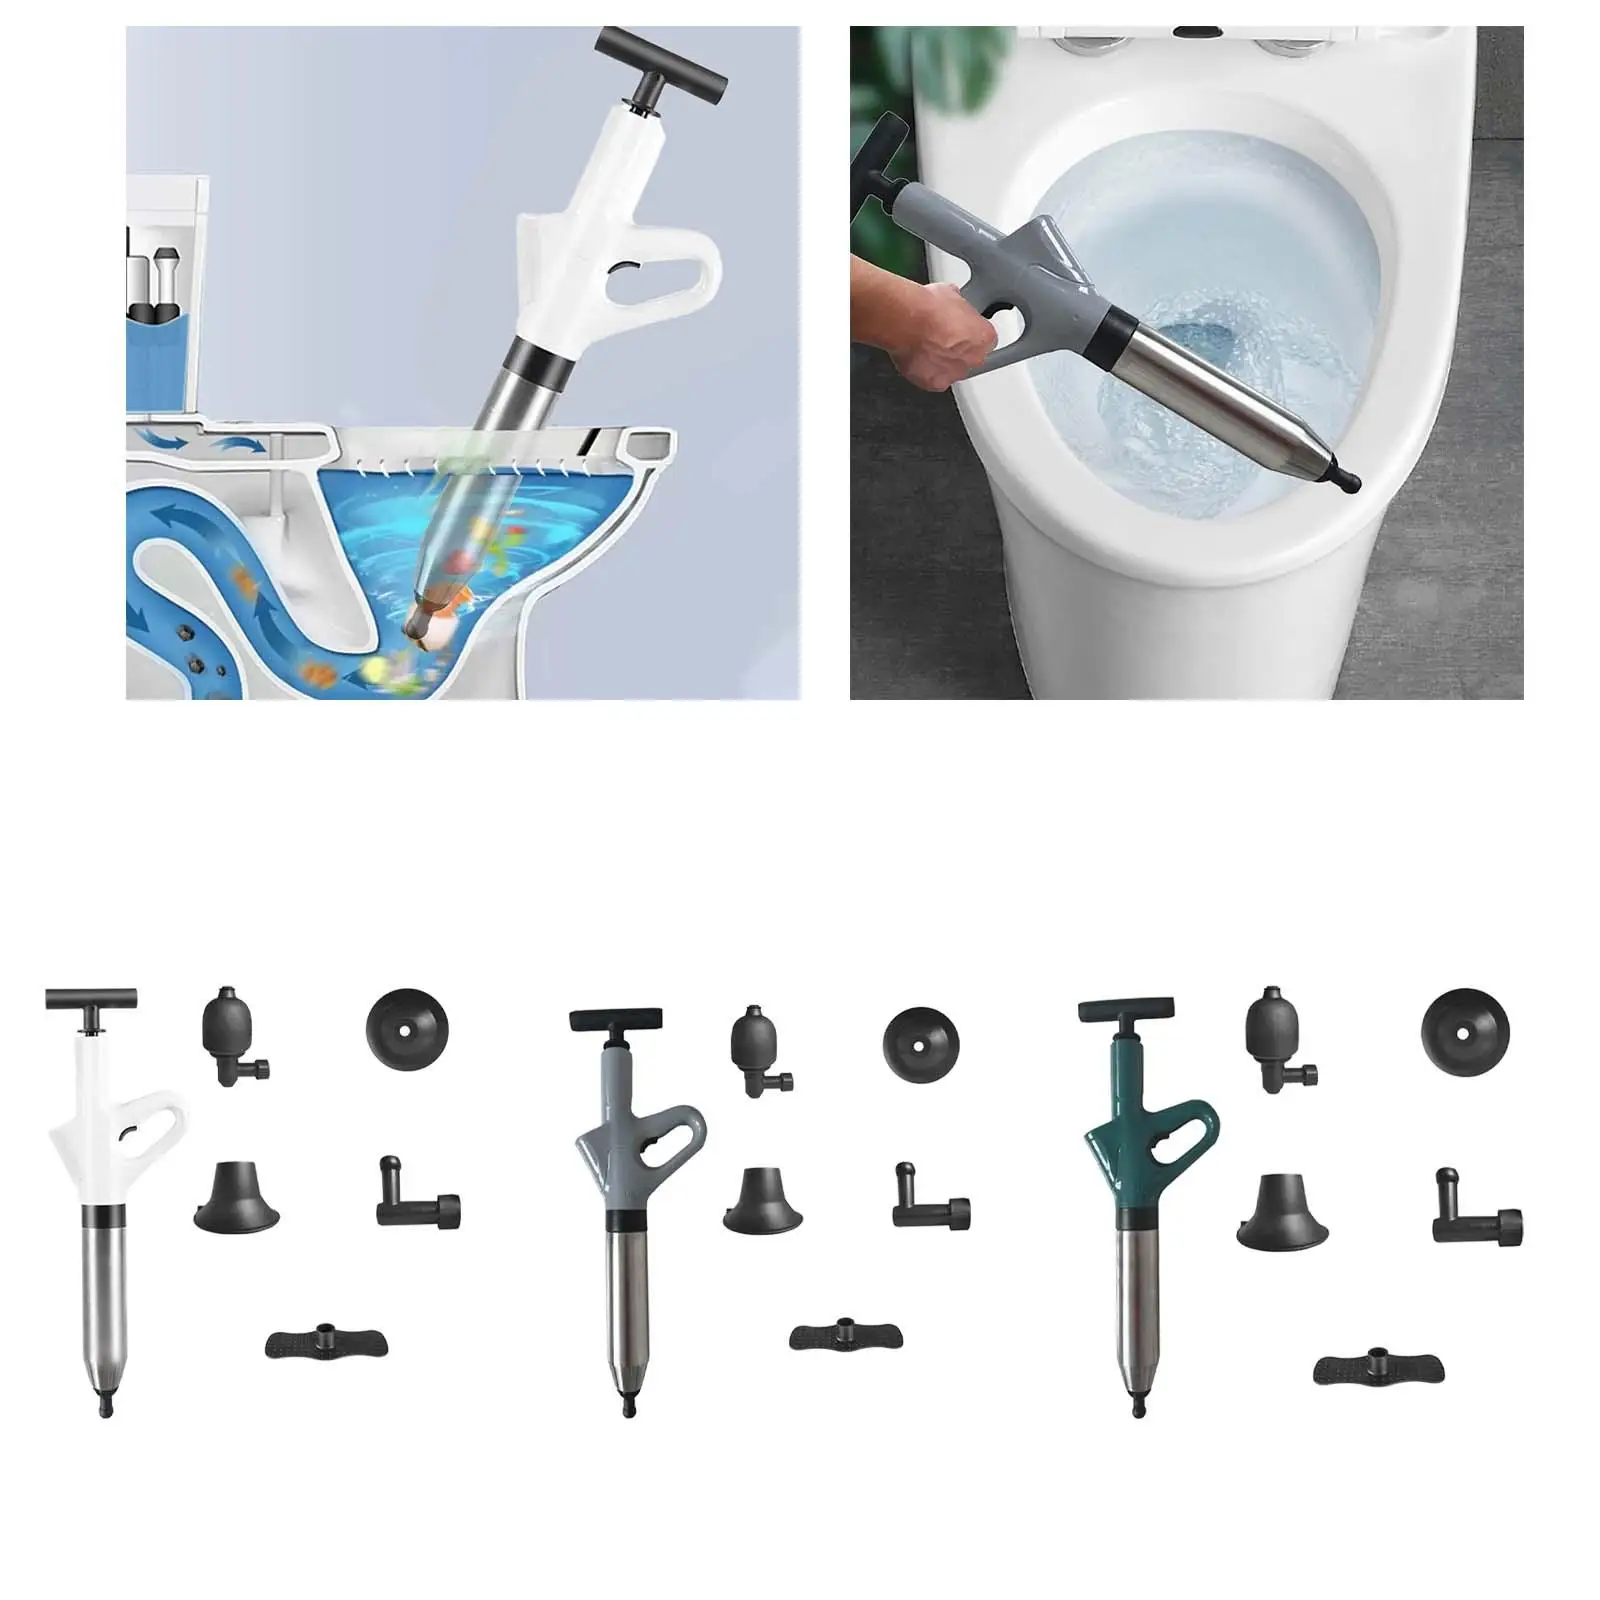 Toilet Plunger Professional Manual Pneumatic Drain Hair Clog Remover Plunger for Washbasin Sinks Kitchen Bathroom Bathtub